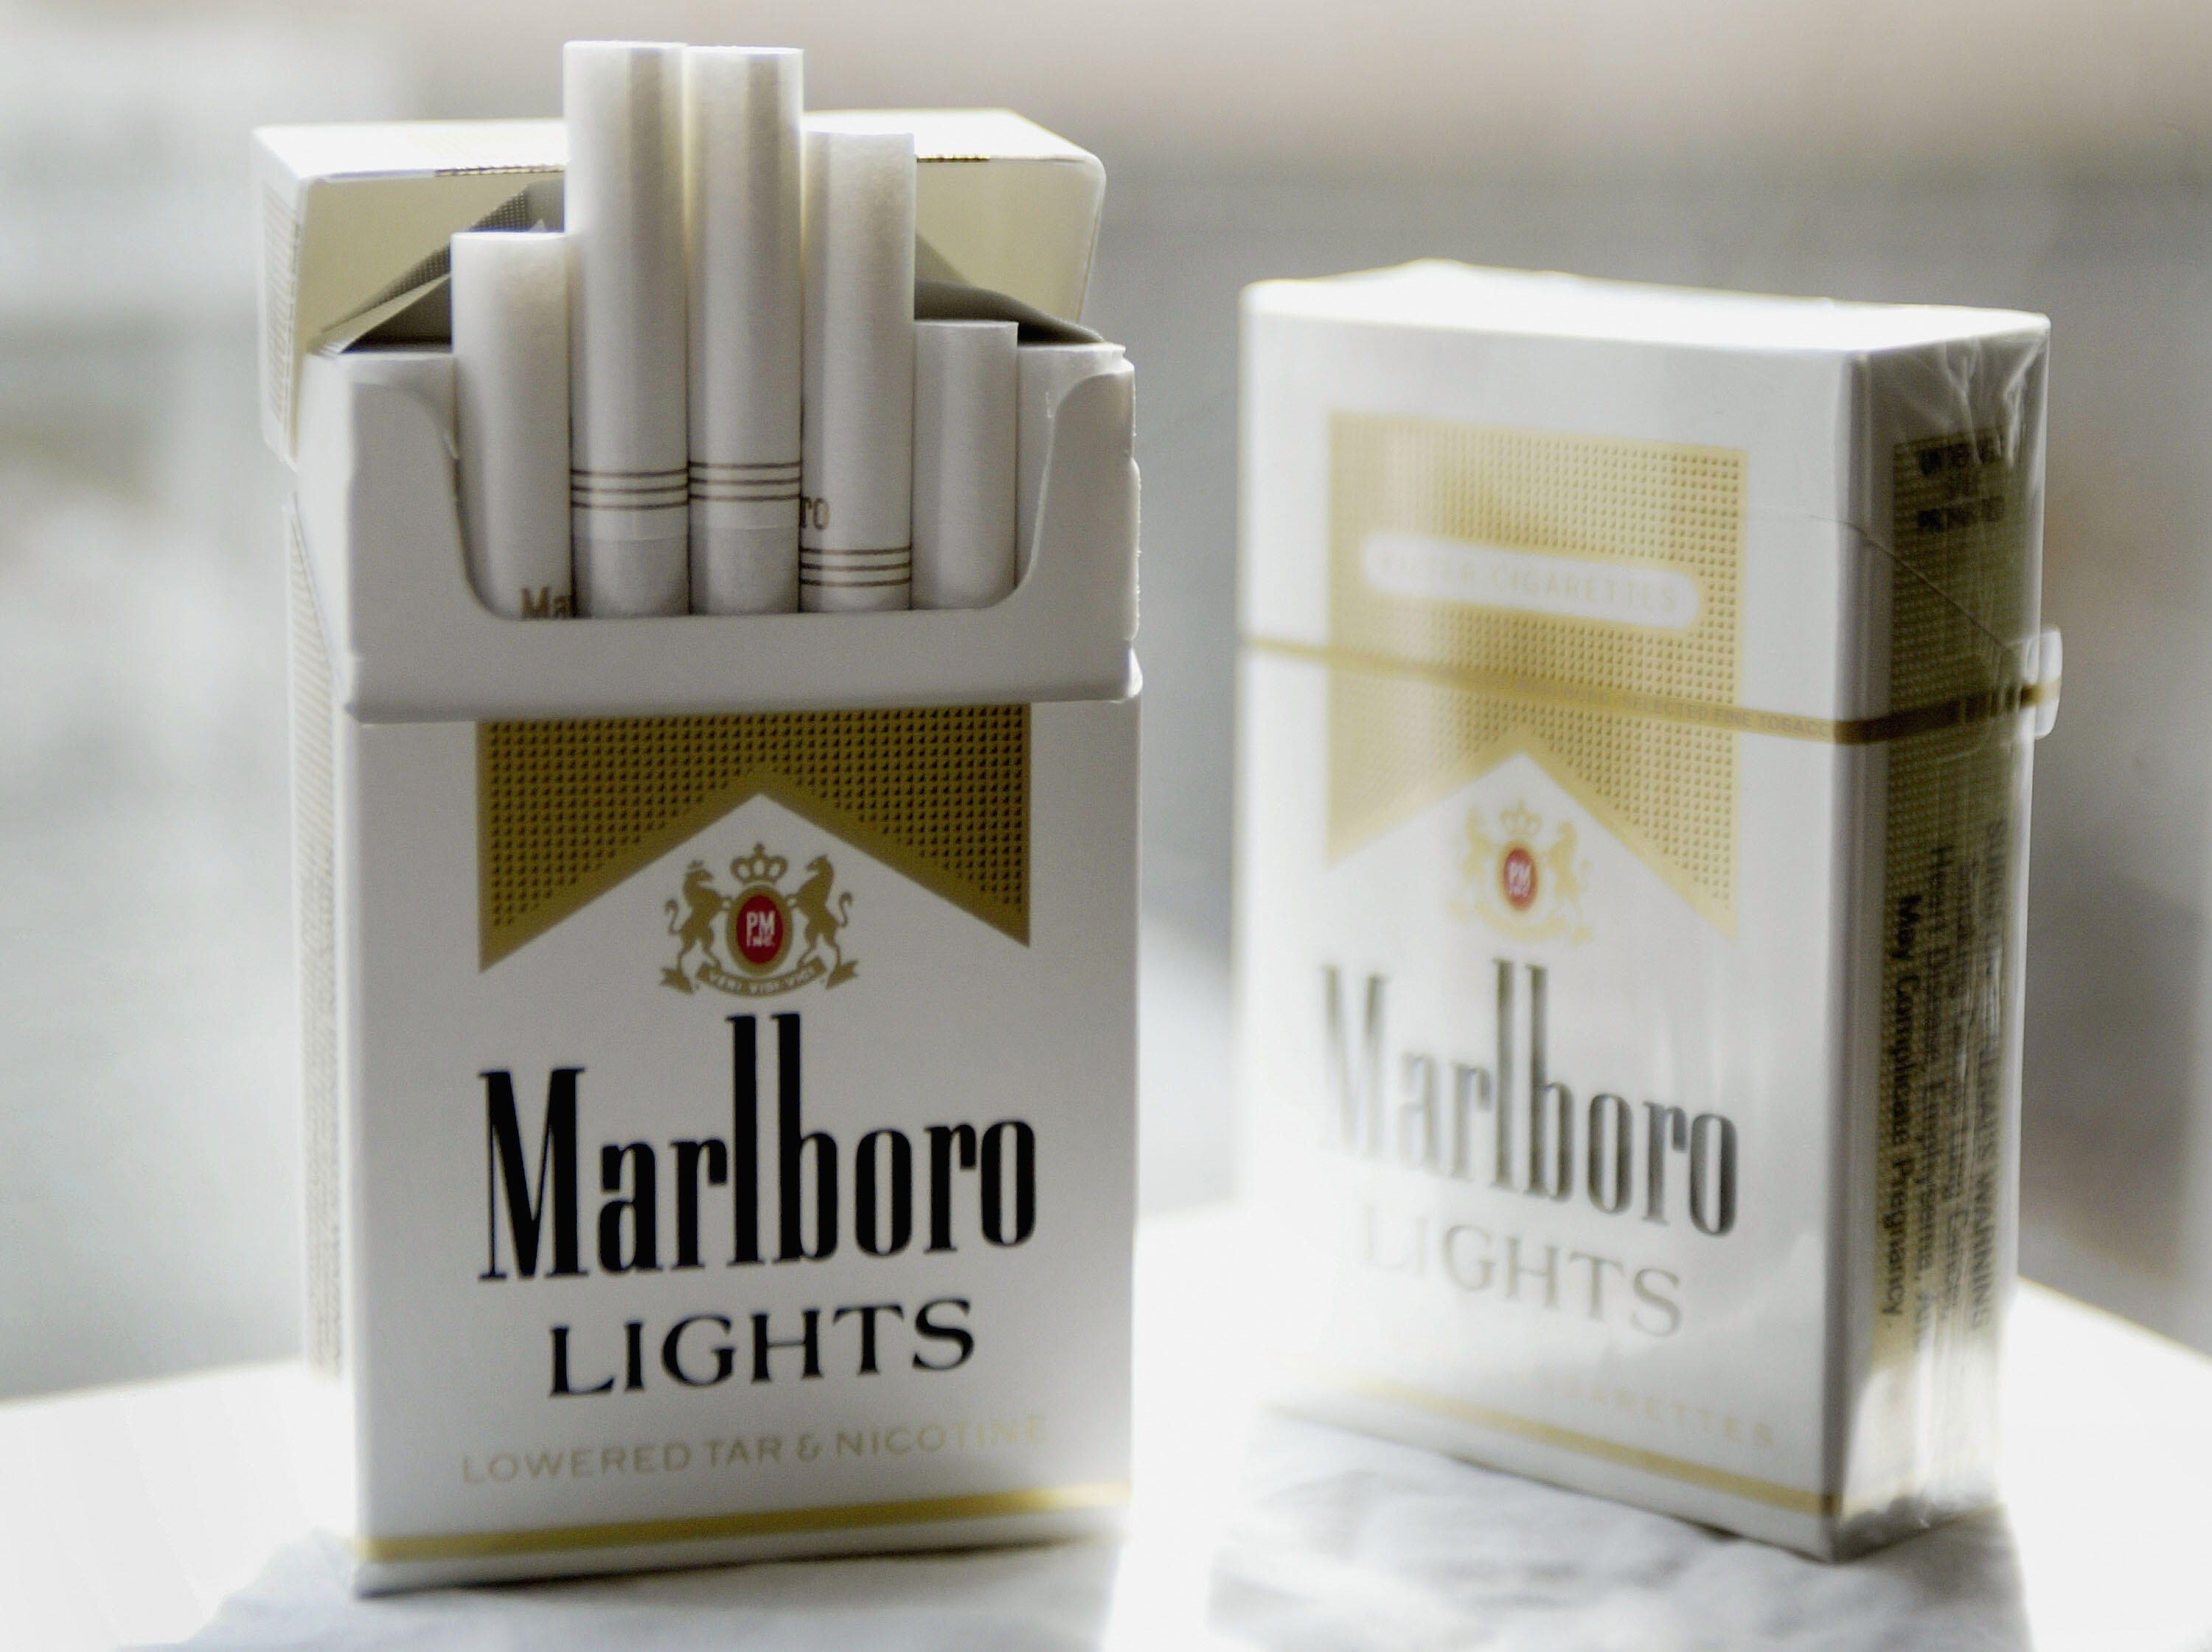 Phillip Morris, compañía matriz de Marlboro, dejará de producir cigarrillos 5c3778e133c93effc2e25771?contain(740,0)